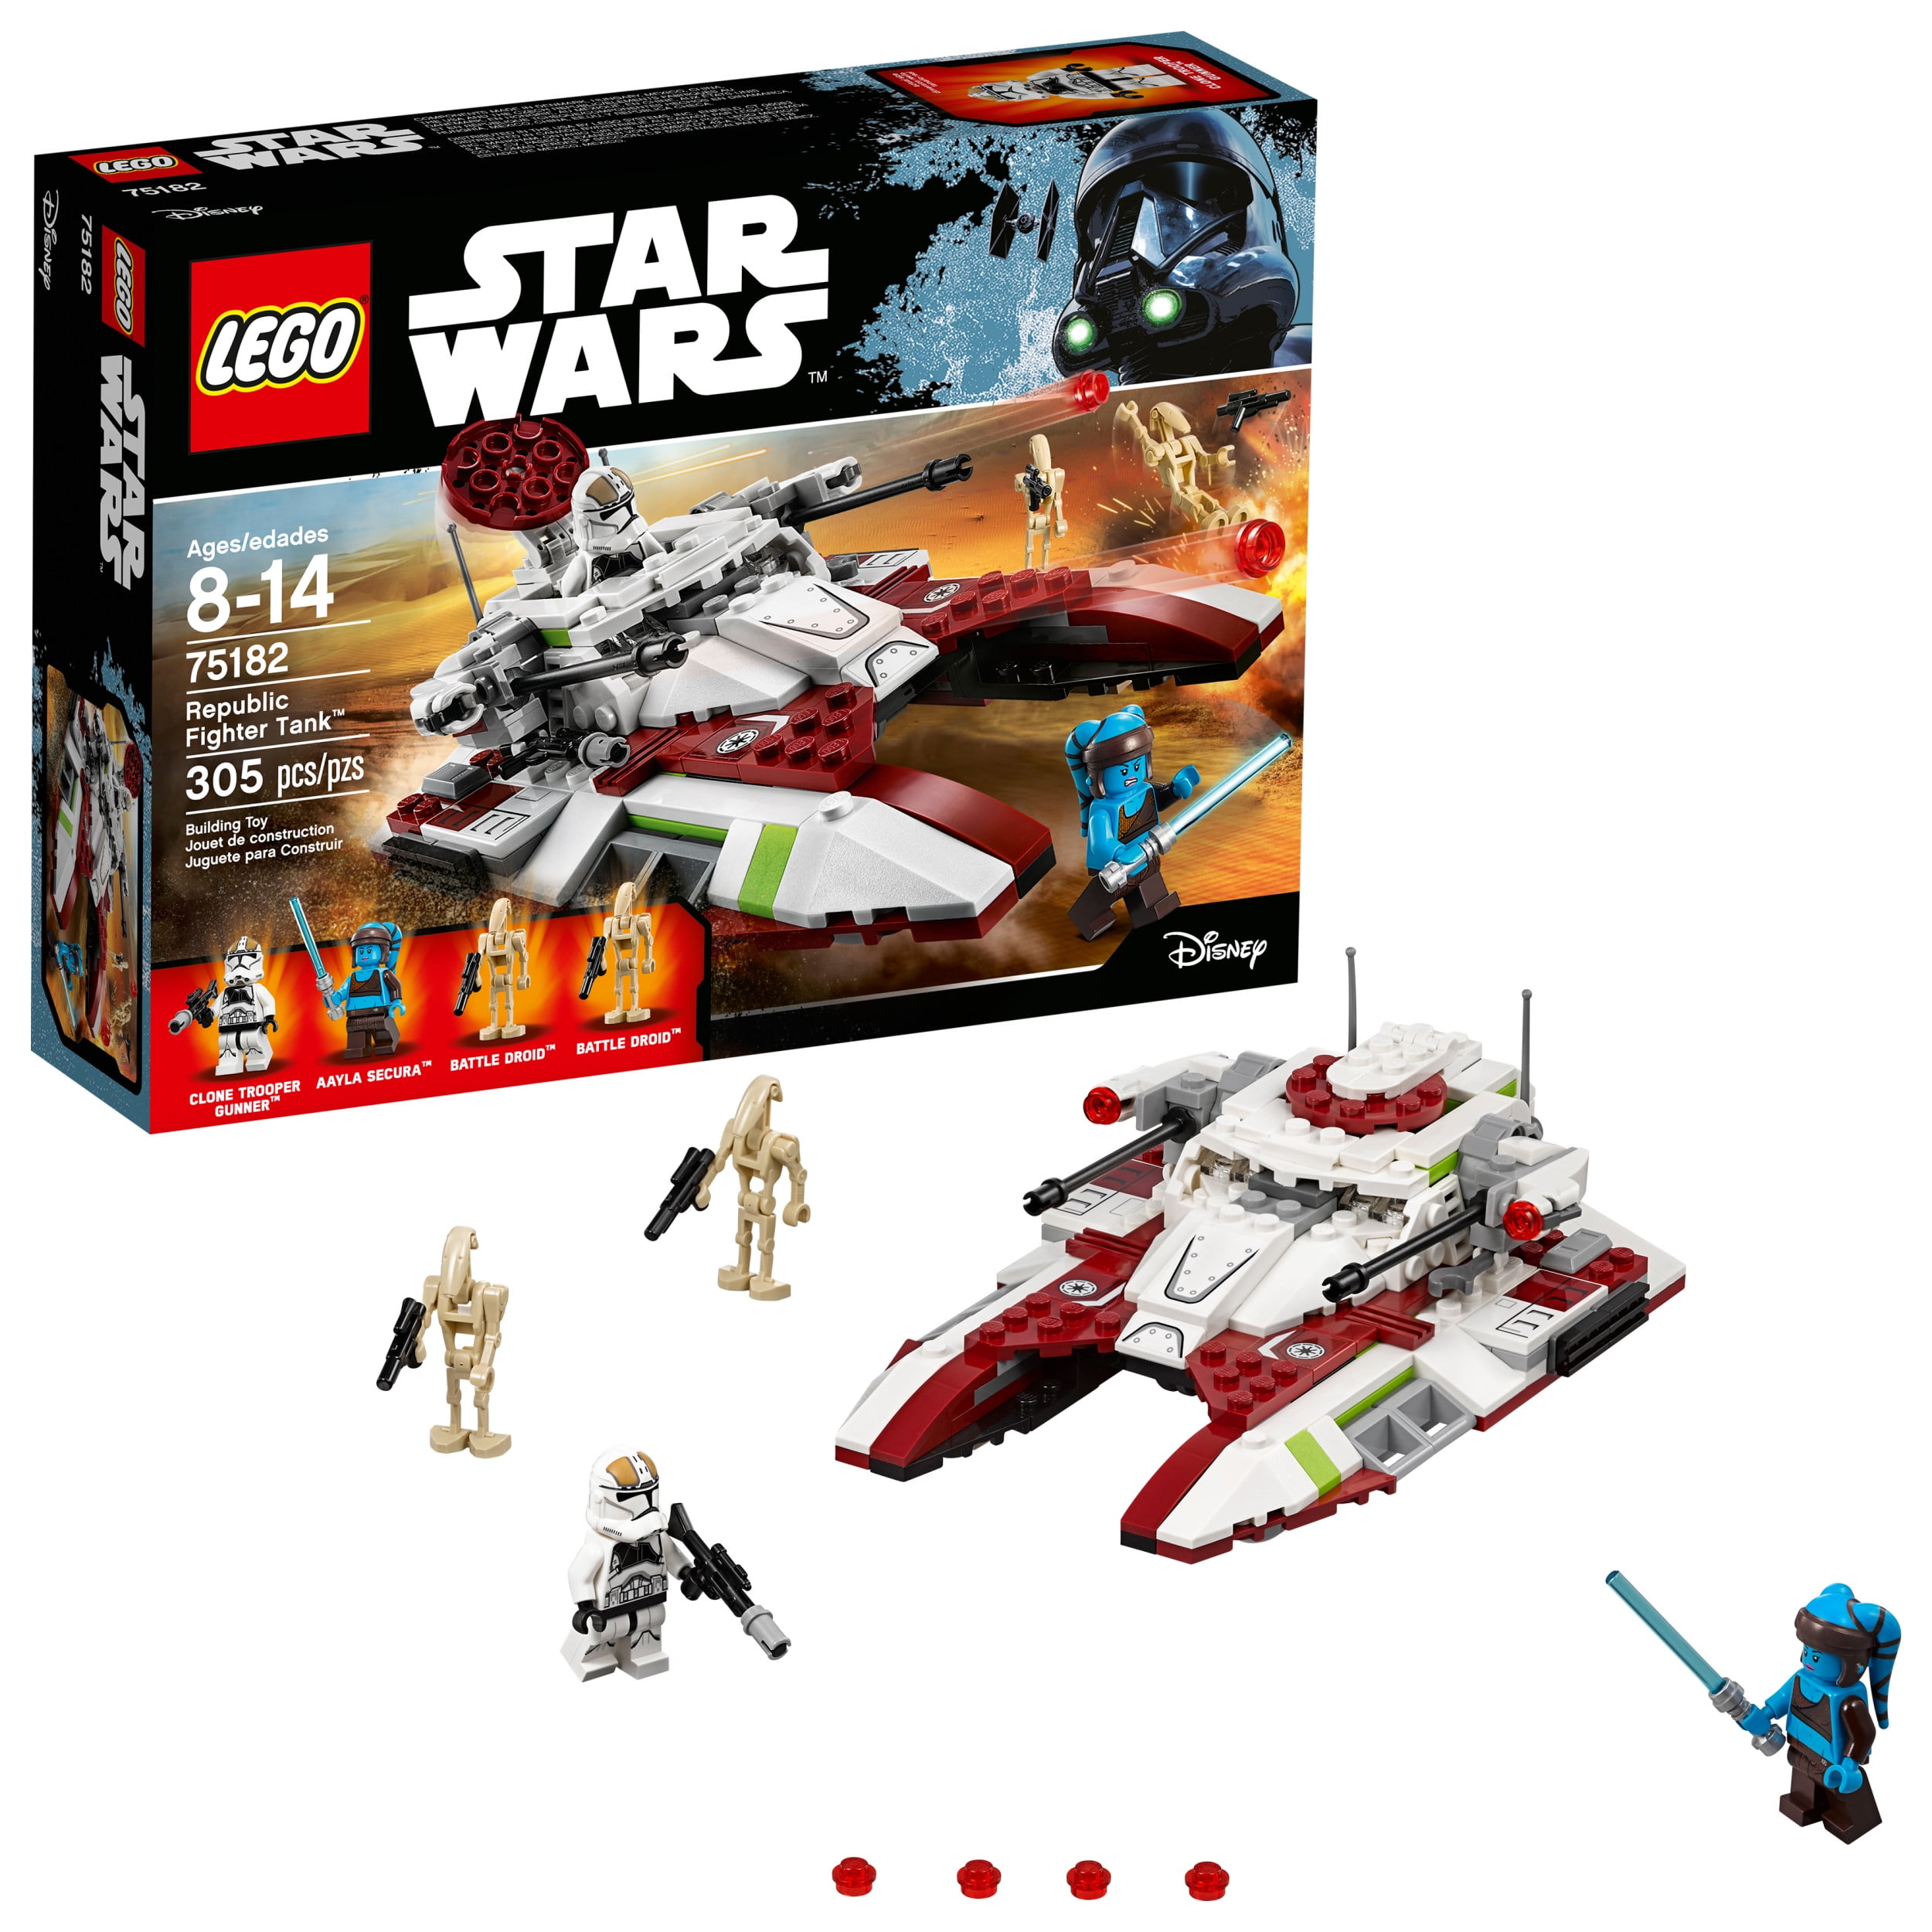 75182 for sale online Lego Star Wars Republic Fighter Tank Building Kit